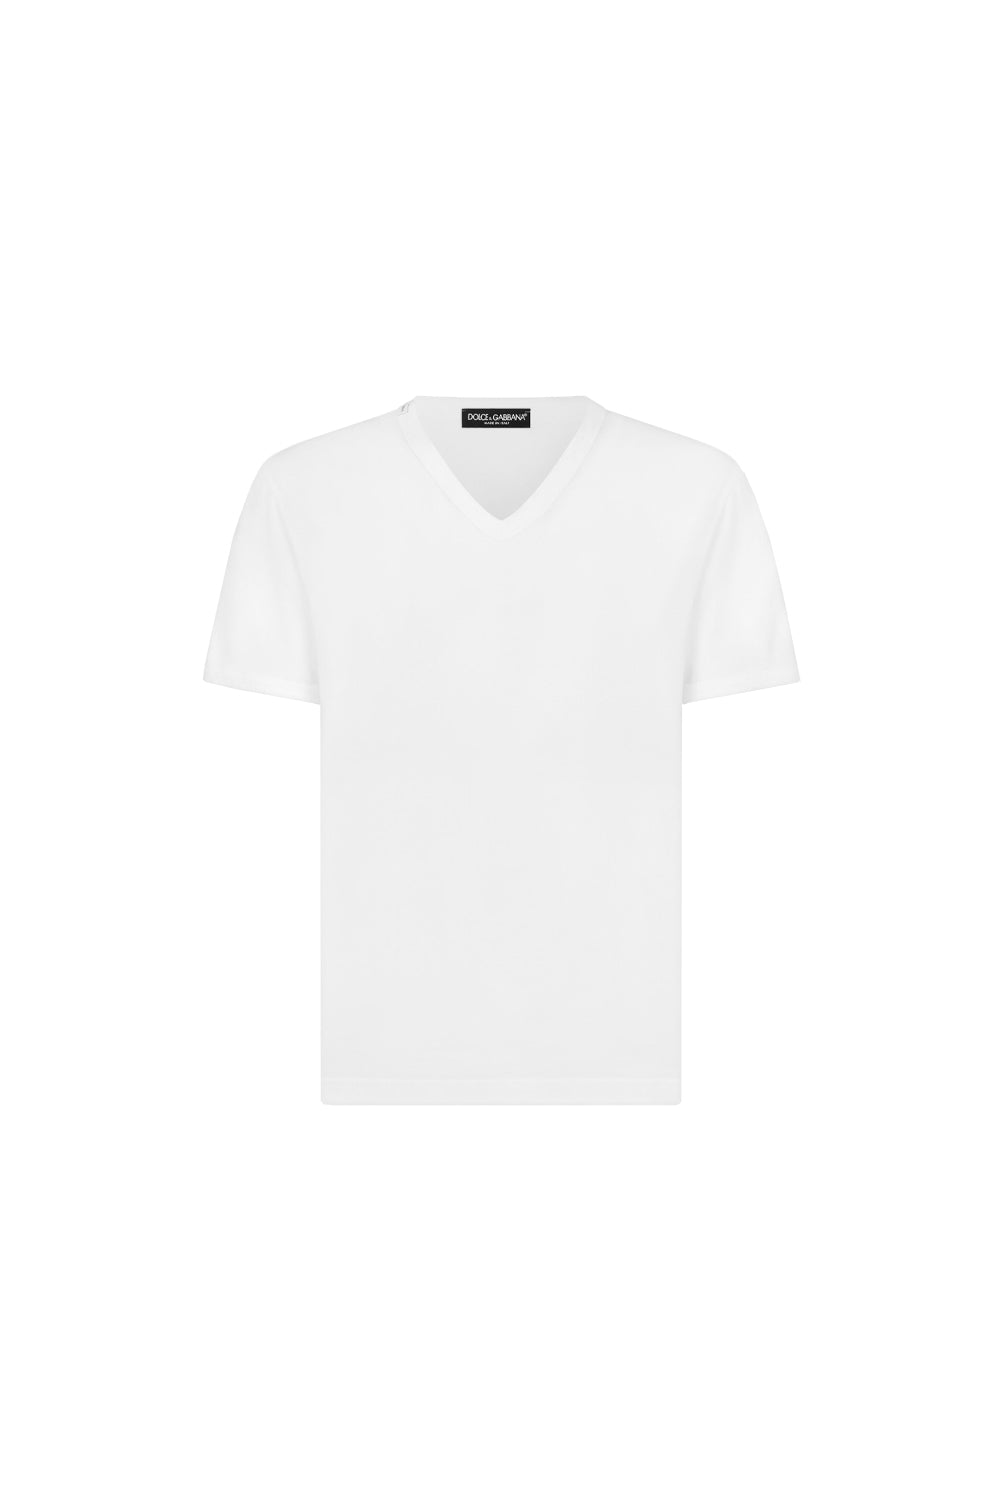 DOLCE & GABBANA T-shirt neck logo tag white